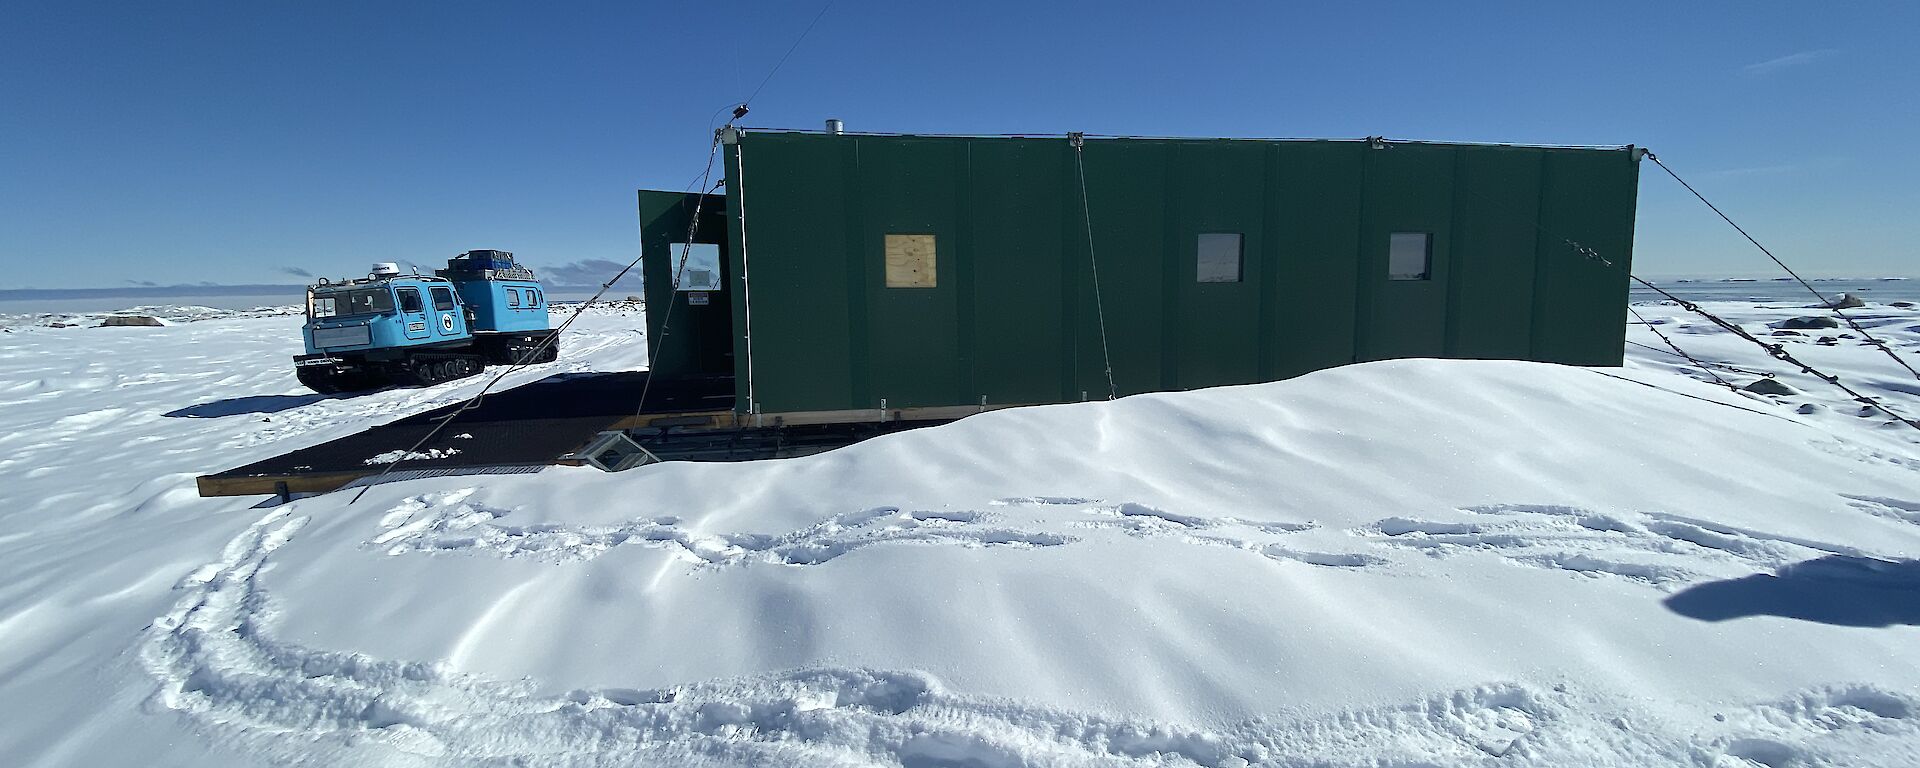 Casey transmitter hut with blue Hägglunds